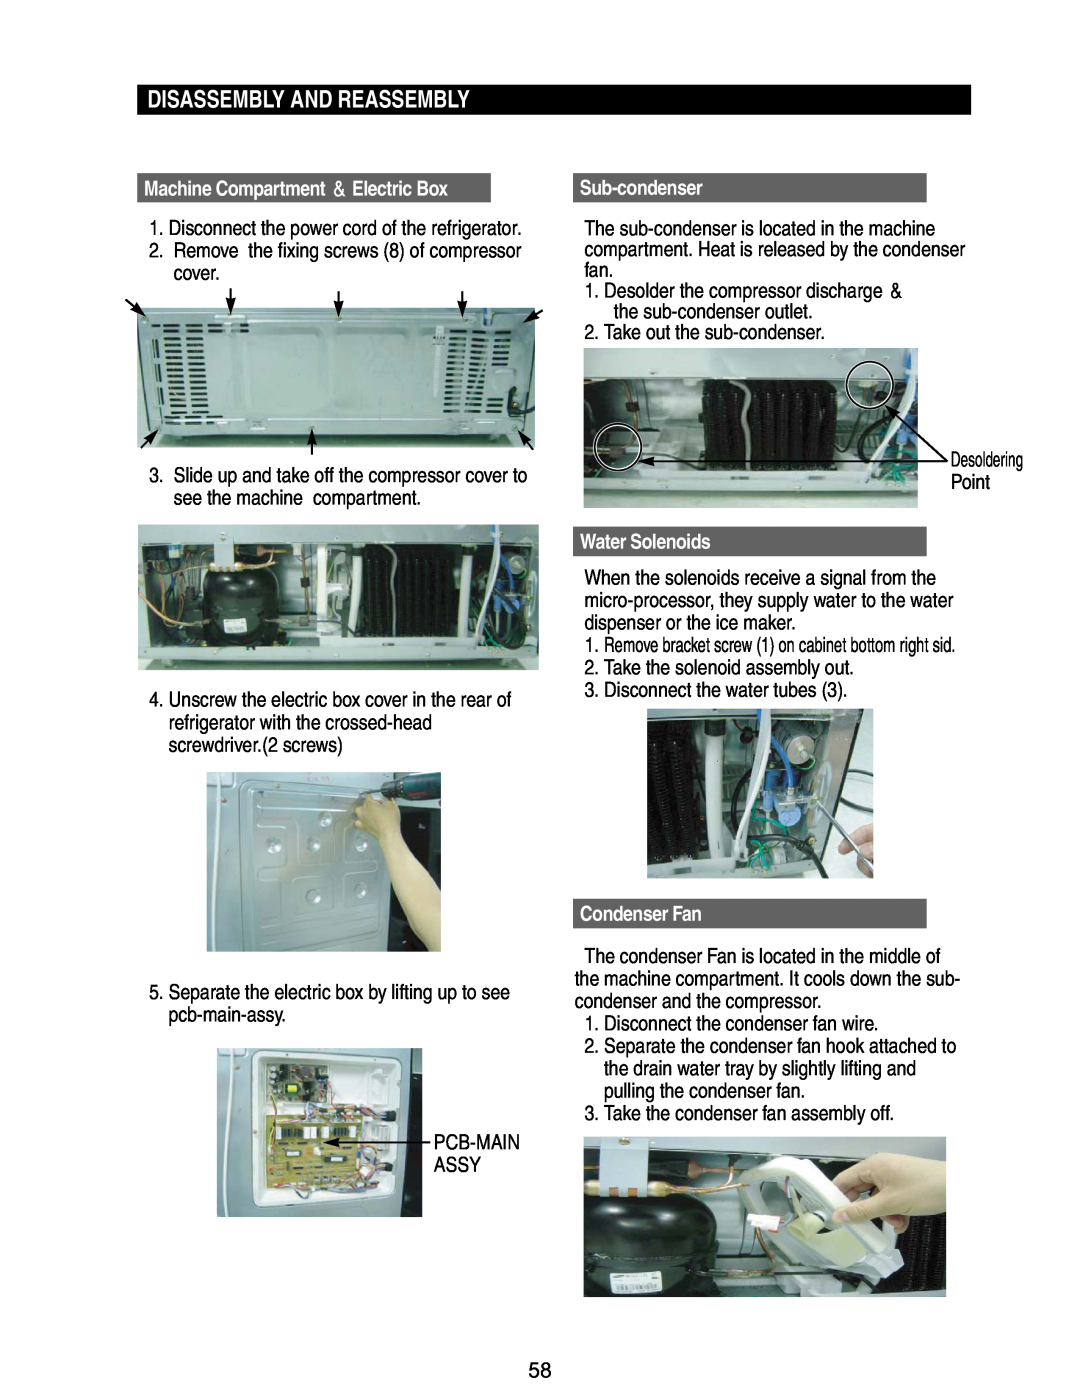 Samsung RM255BABB, RM255BASB manual Machine Compartment Electric Box, Sub-condenser, Water Solenoids, Condenser Fan 